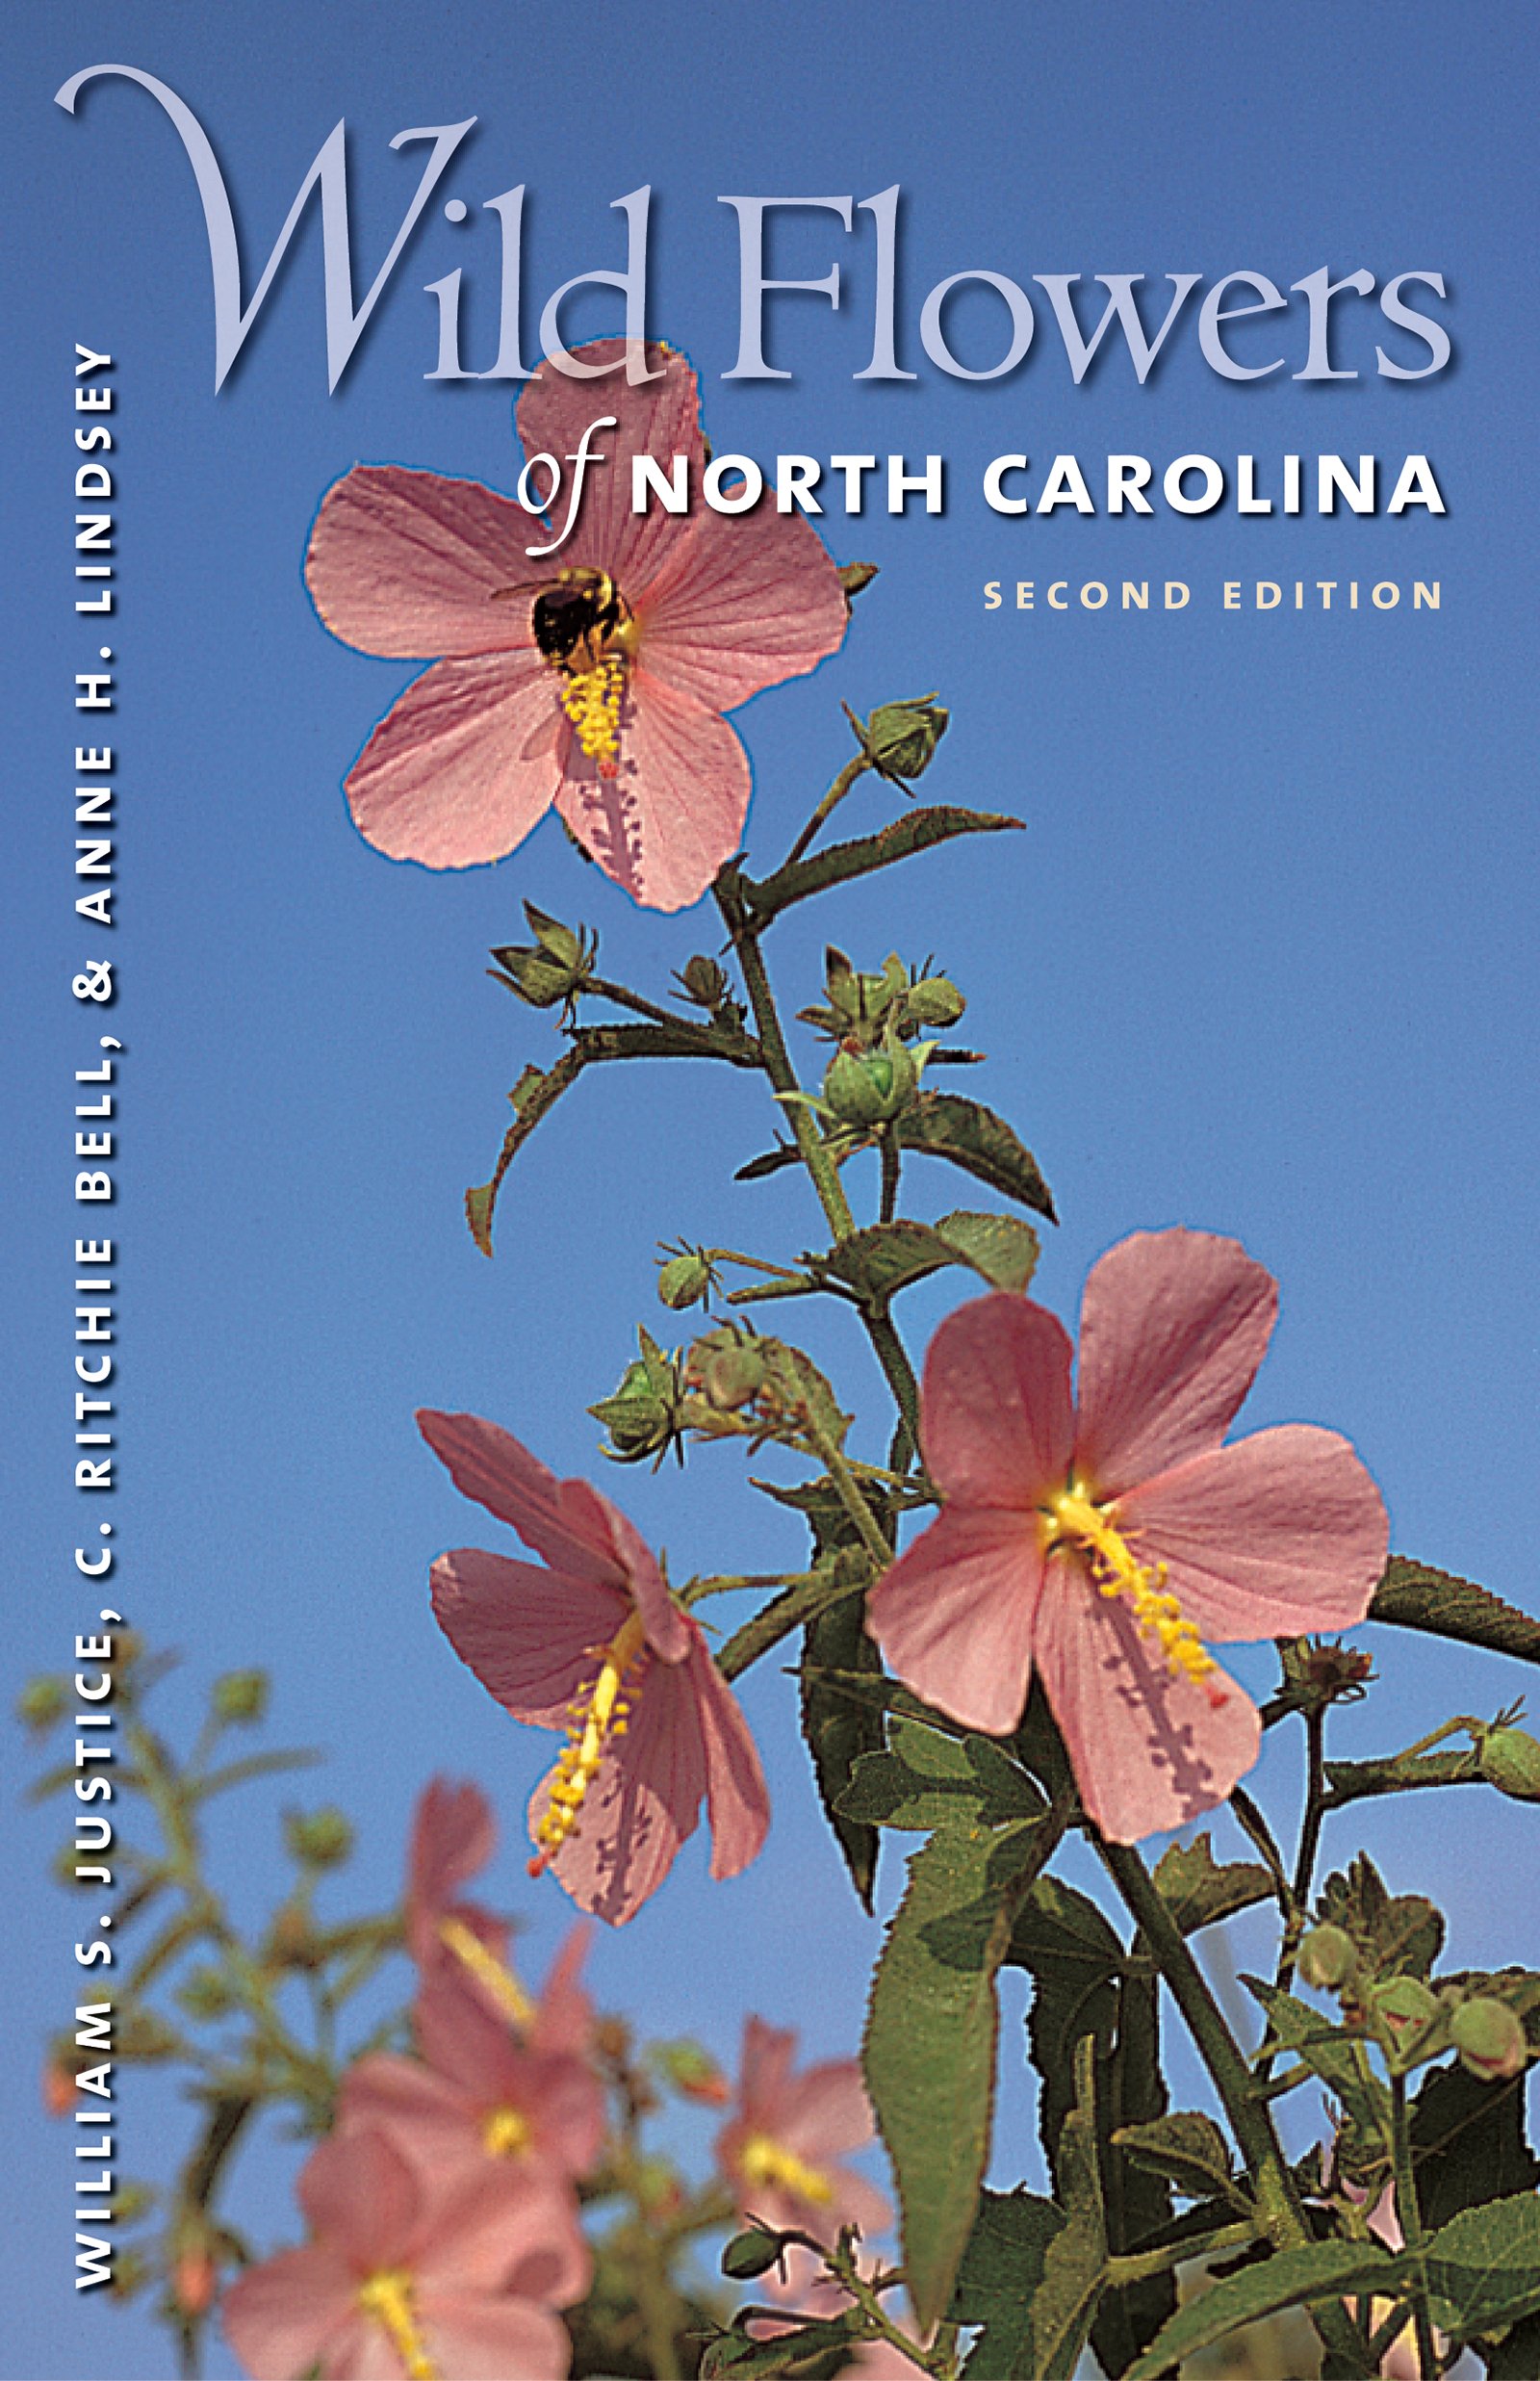 Wild Flowers of North Carolina: William S. Justice, C. Ritchie Bell ...